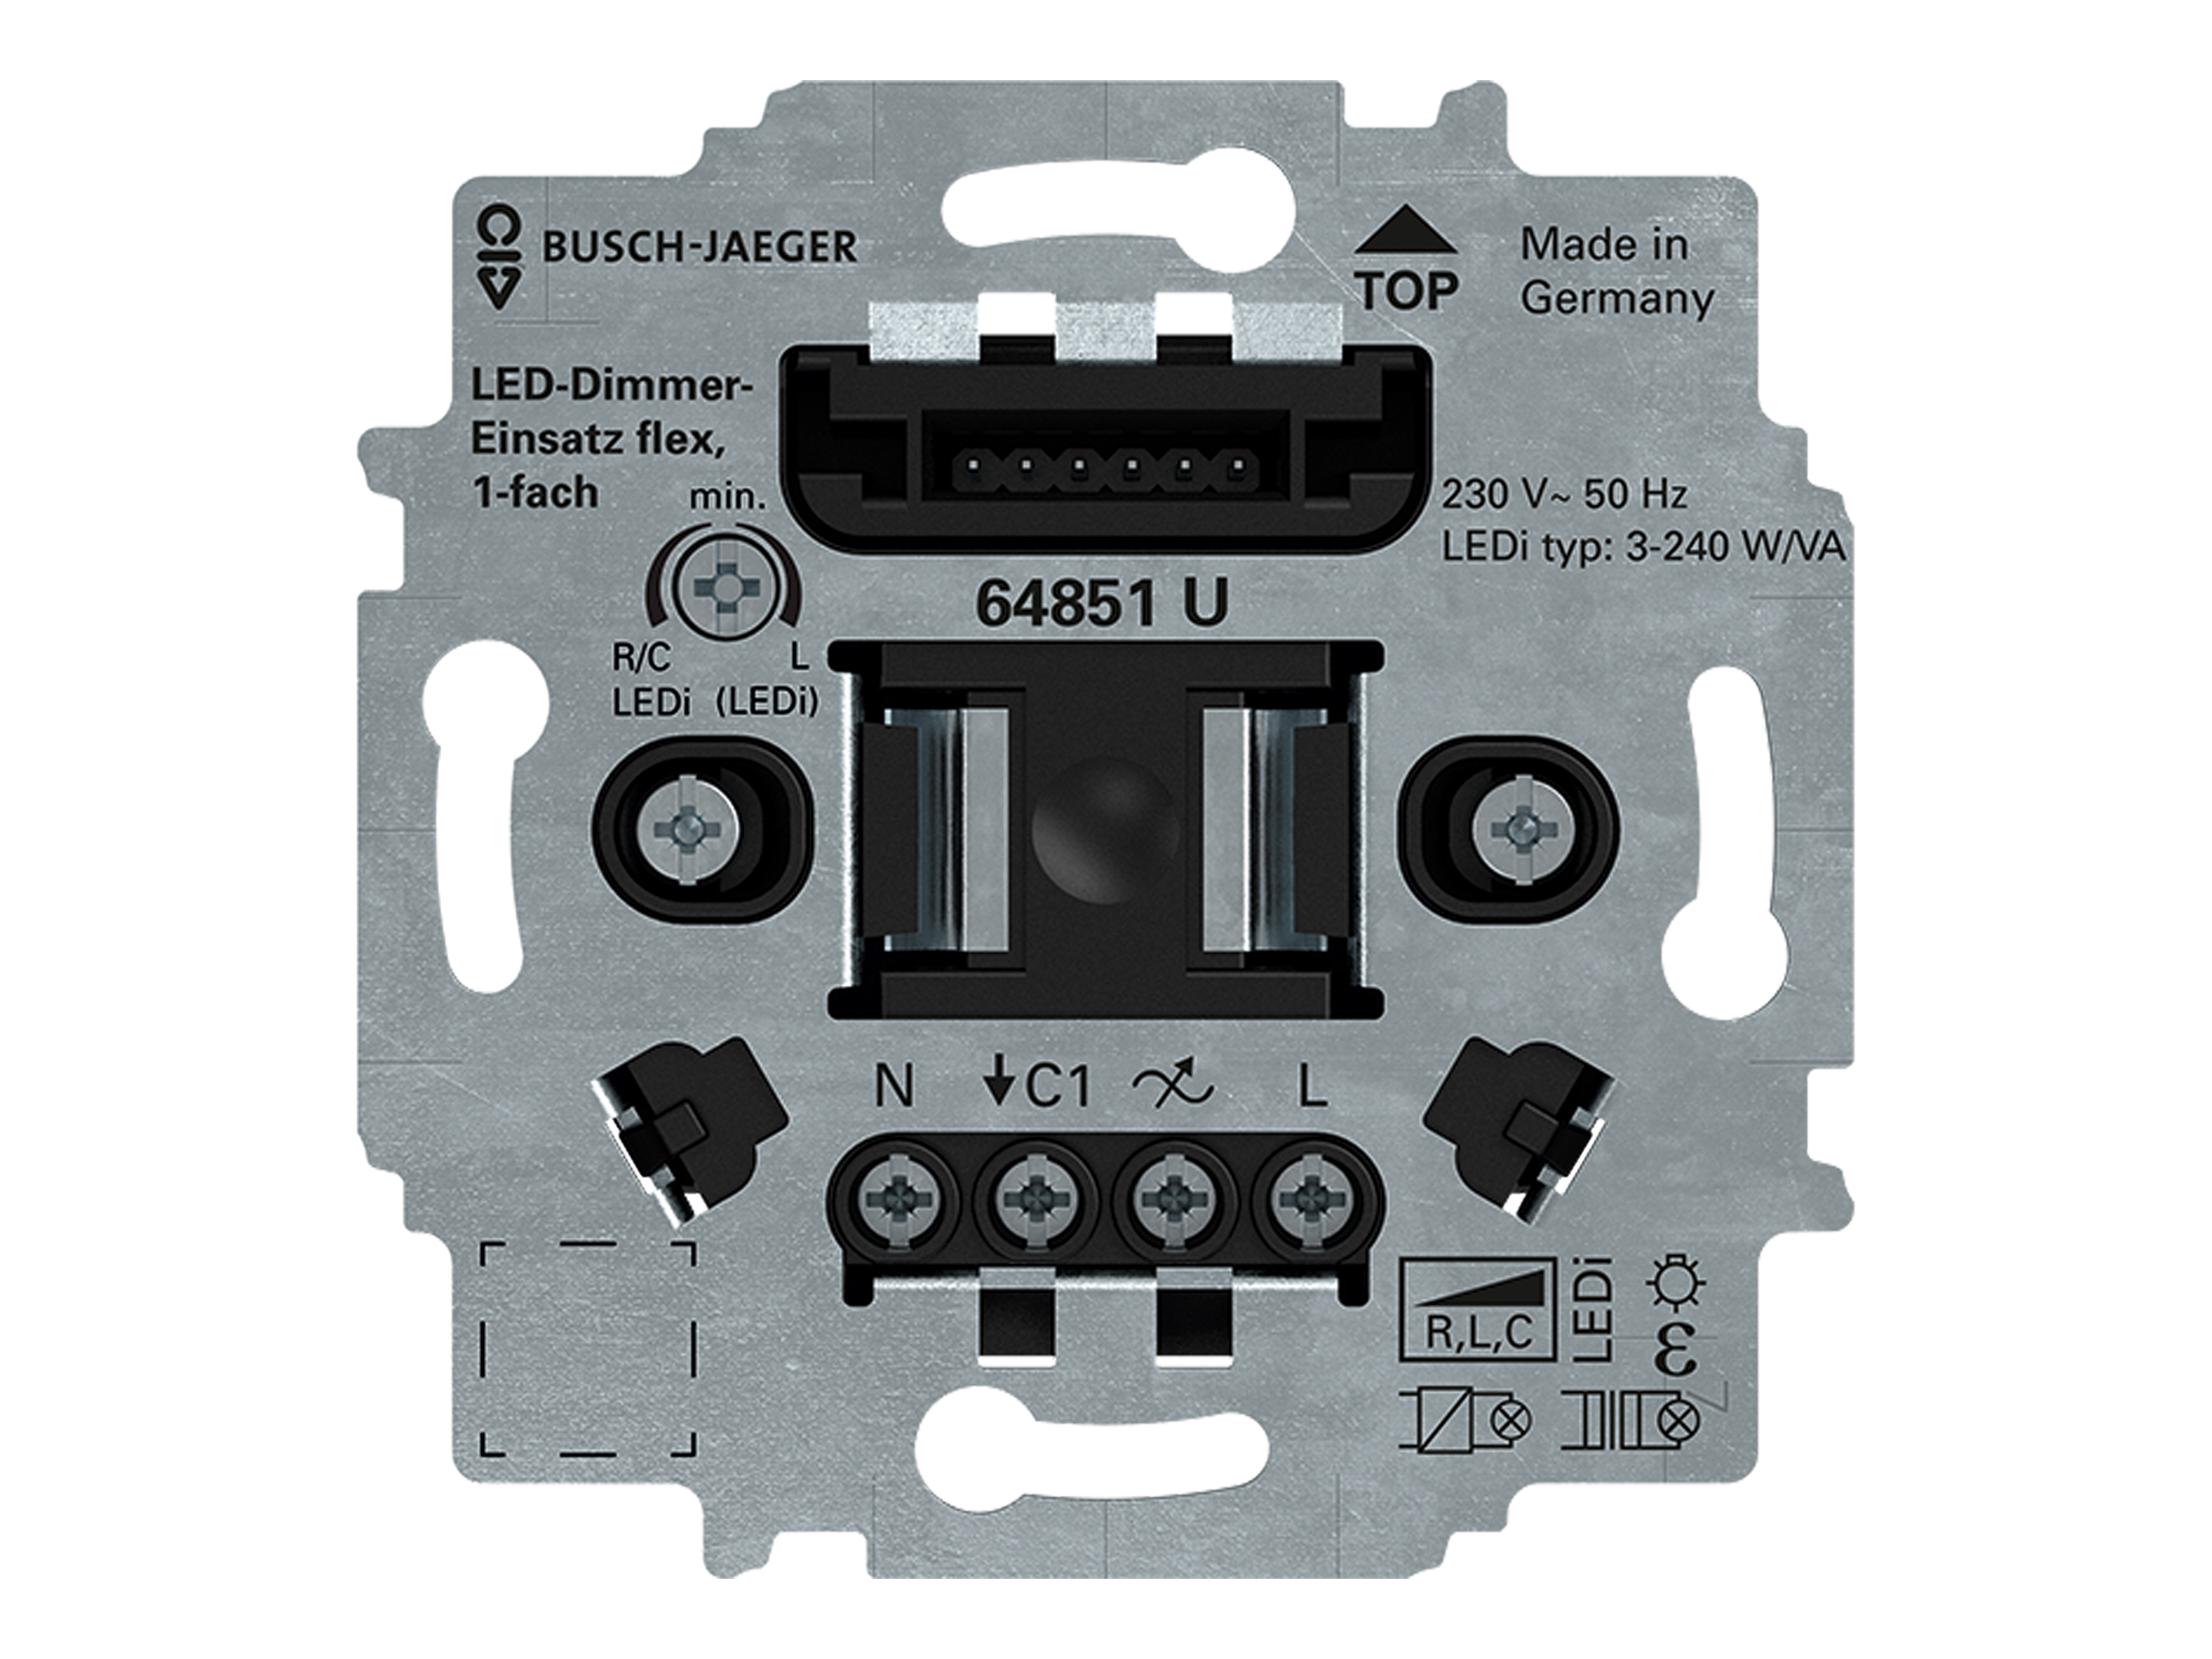 BUSCH-JAEGER LED-Dimmer-Einsatz flex 64851 U, 1-fach